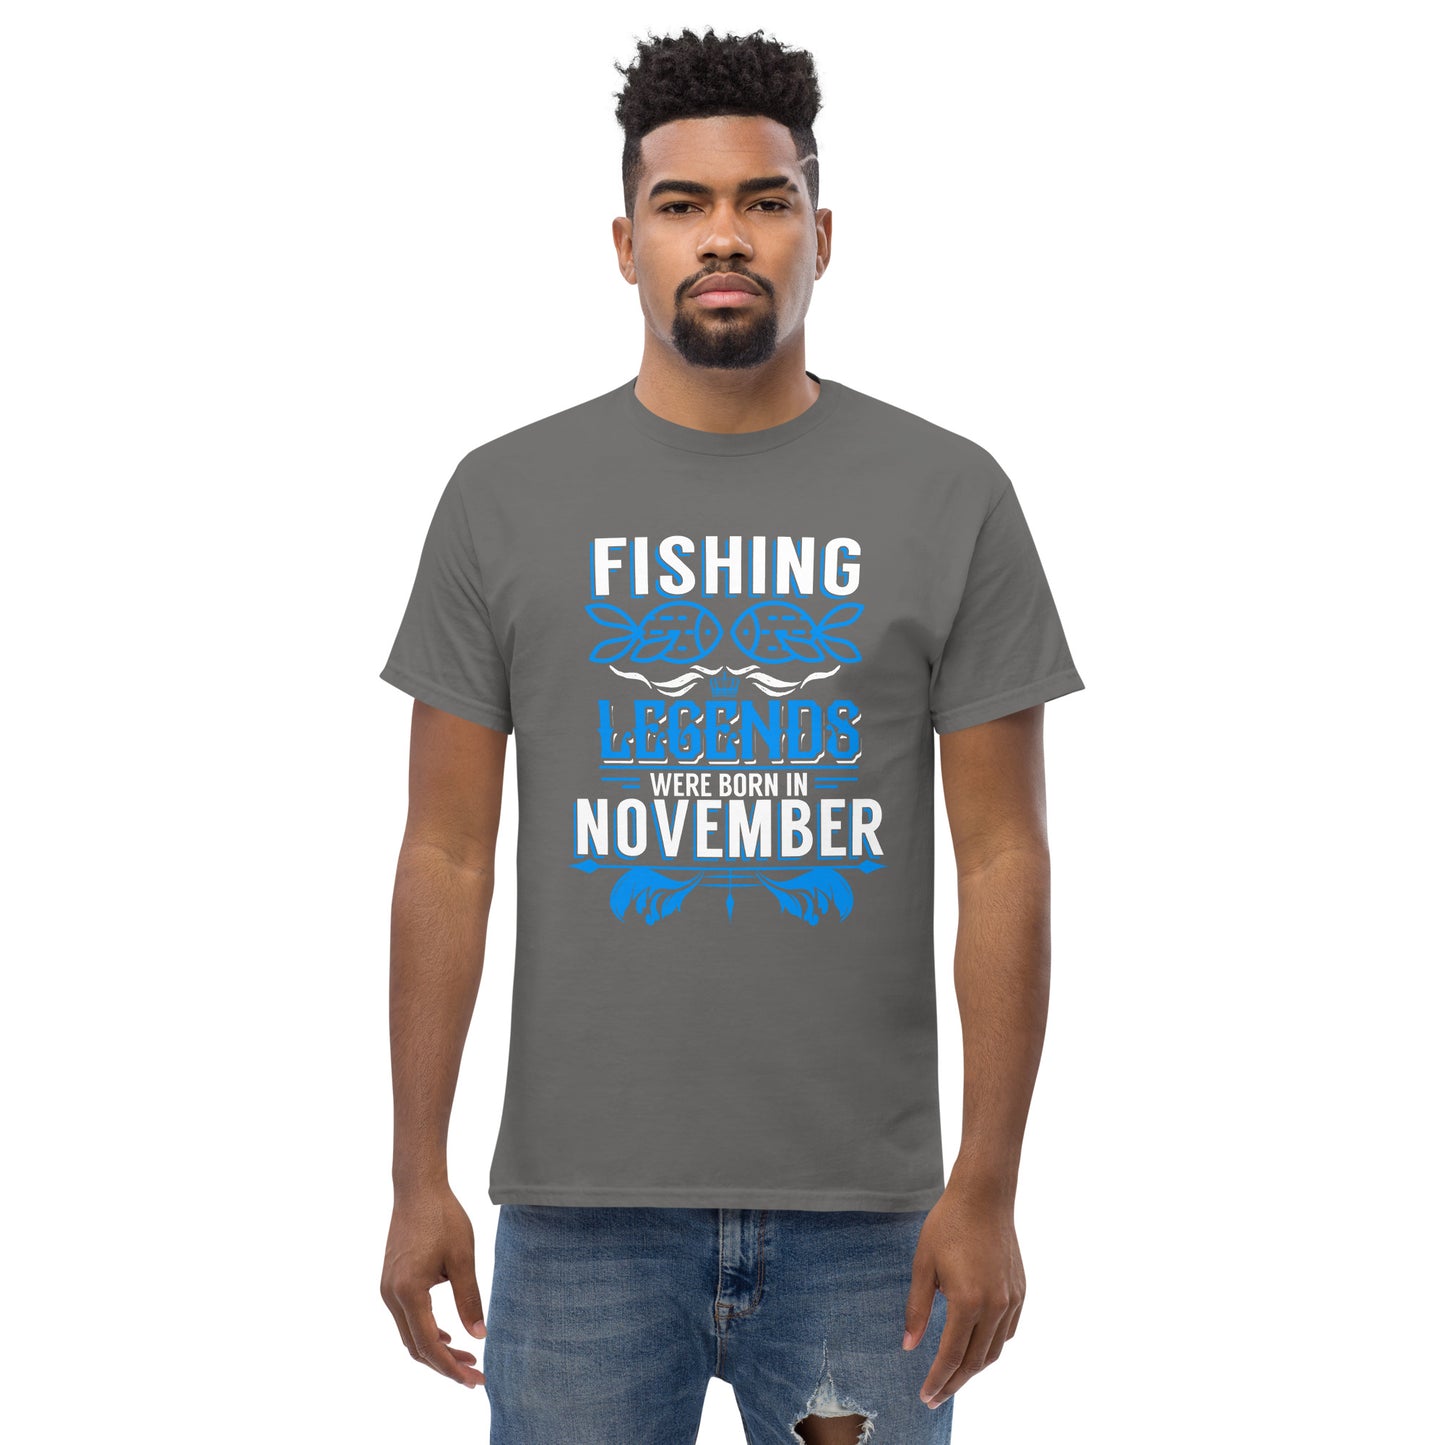 Fishing Legends Were Born In November T-Shirt